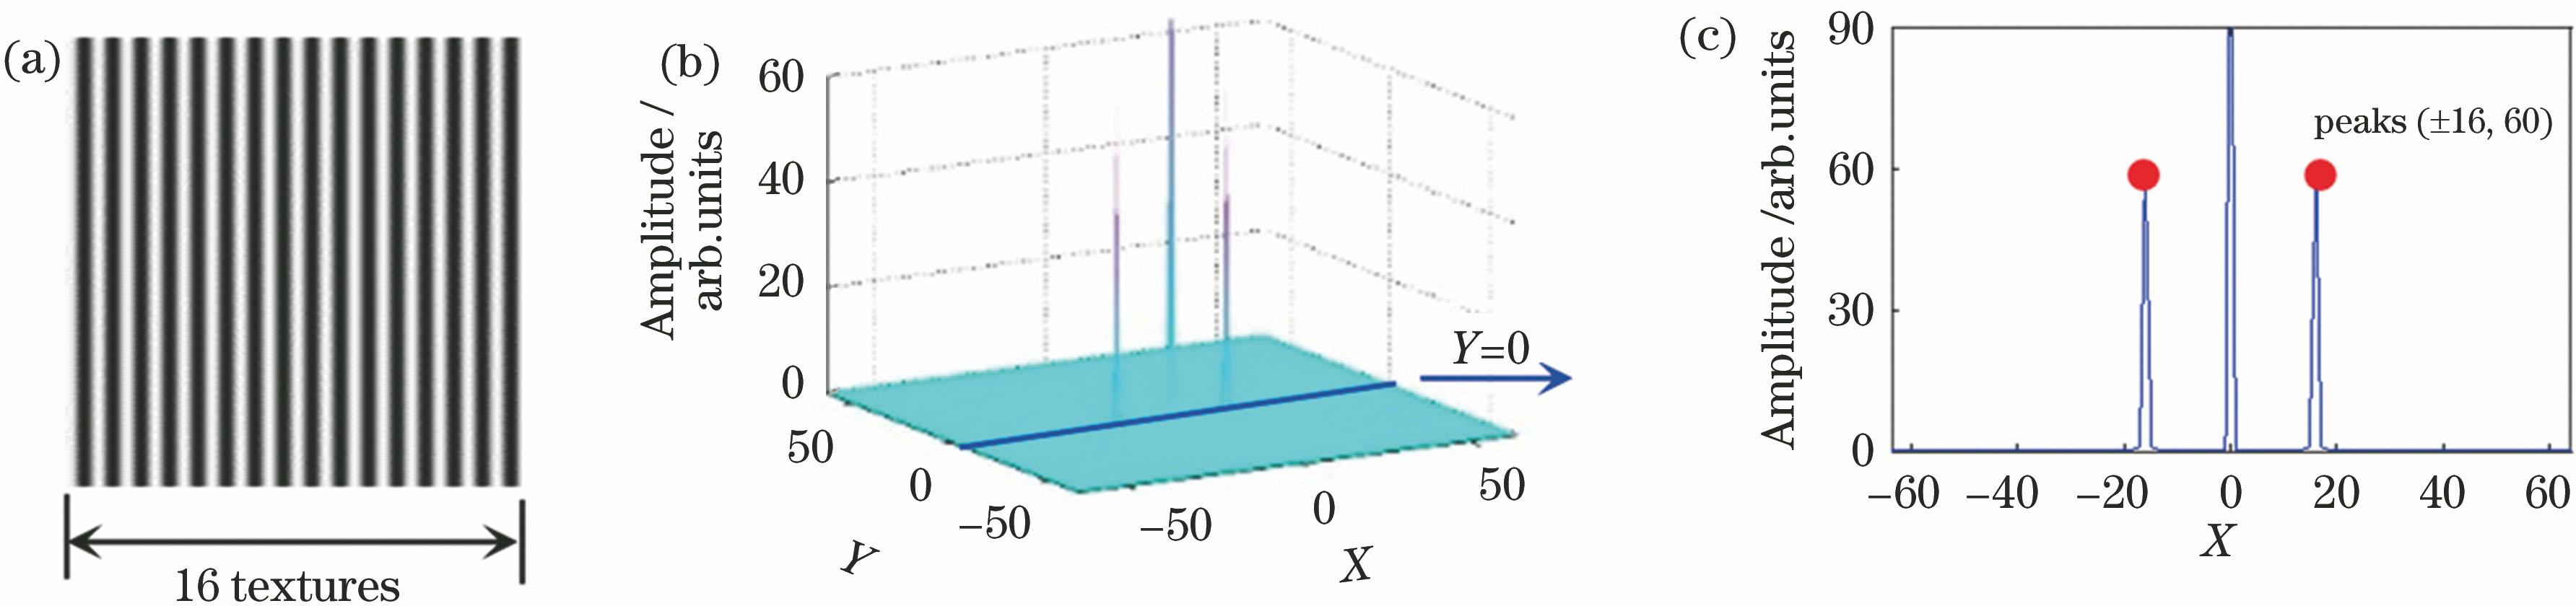 Simulation texture image and spectrum characteristic. (a) Simulation texture image; (b) 3D spectrum; (c) transverse spectrum and characteristic peaks